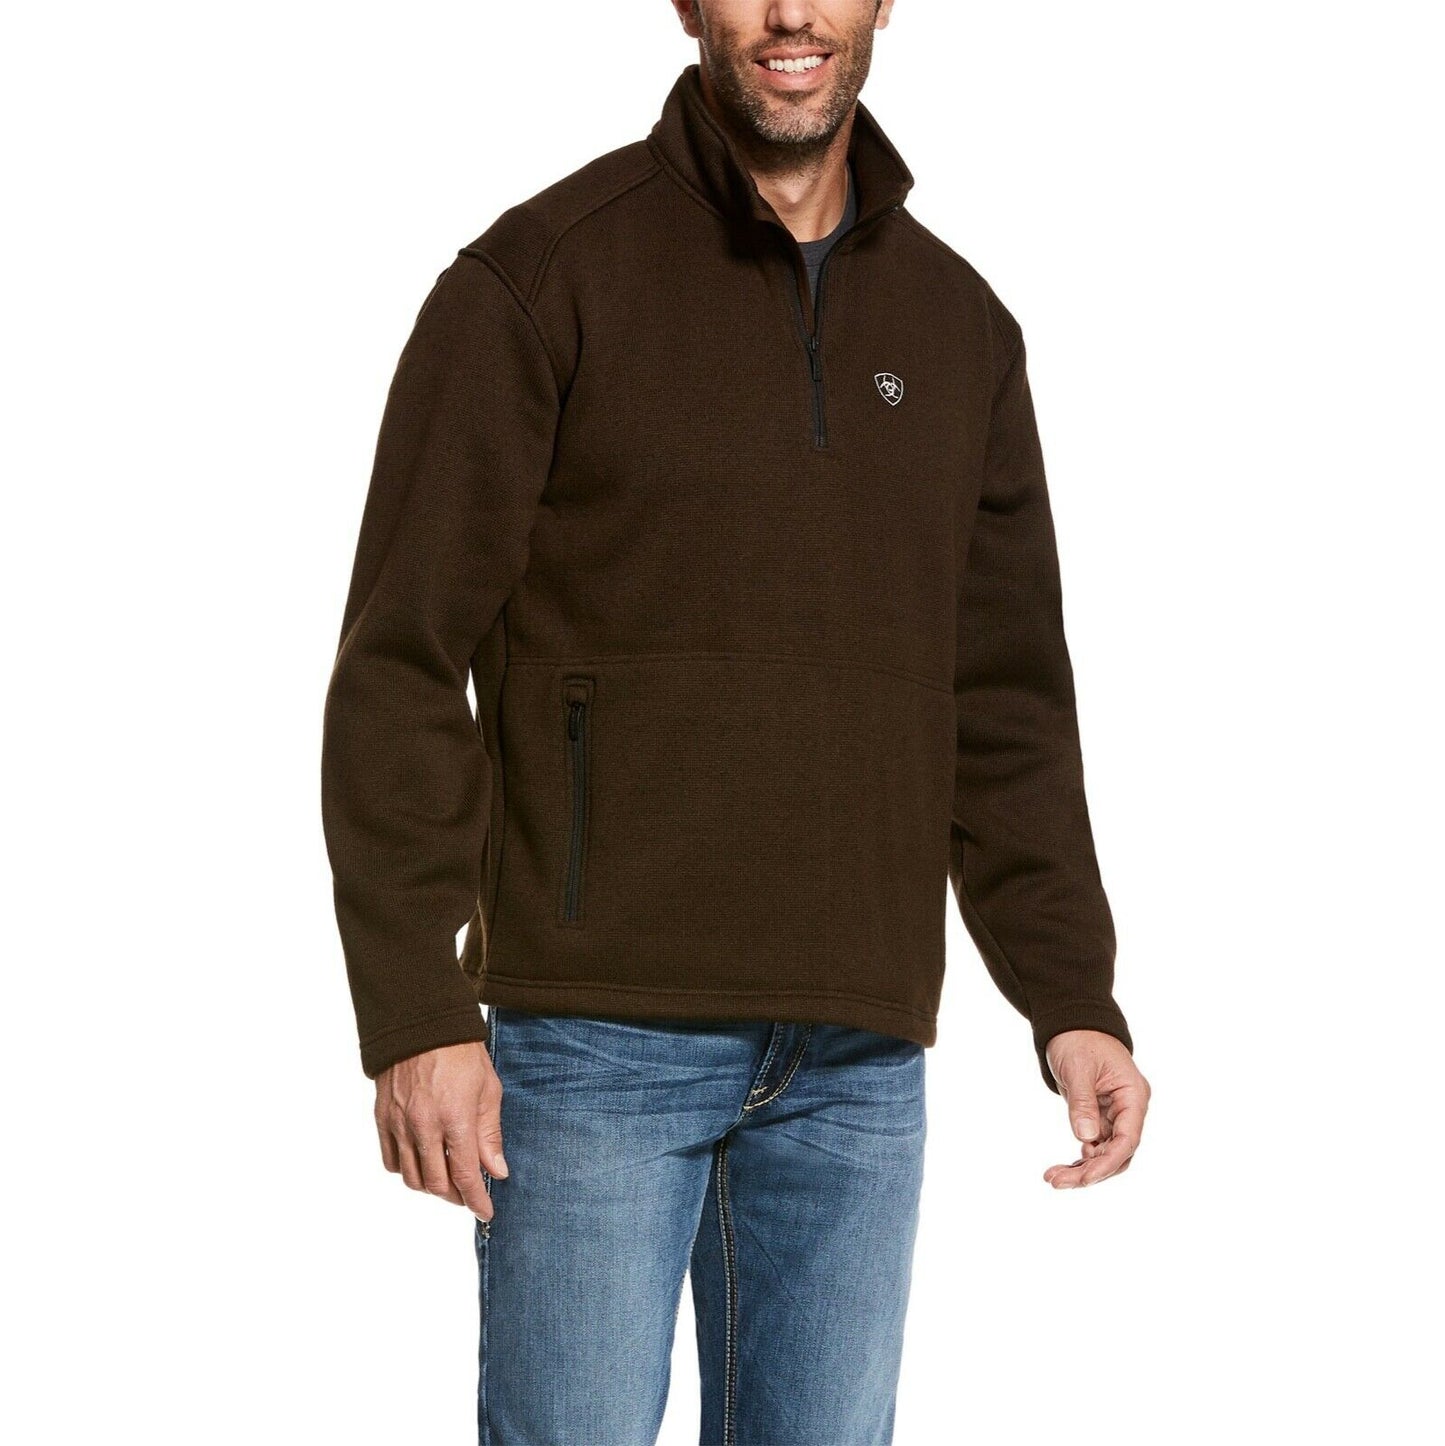 Ariat® Men's Caldwell 1/4 Zip Dark Brew Brown Sweater 10027968